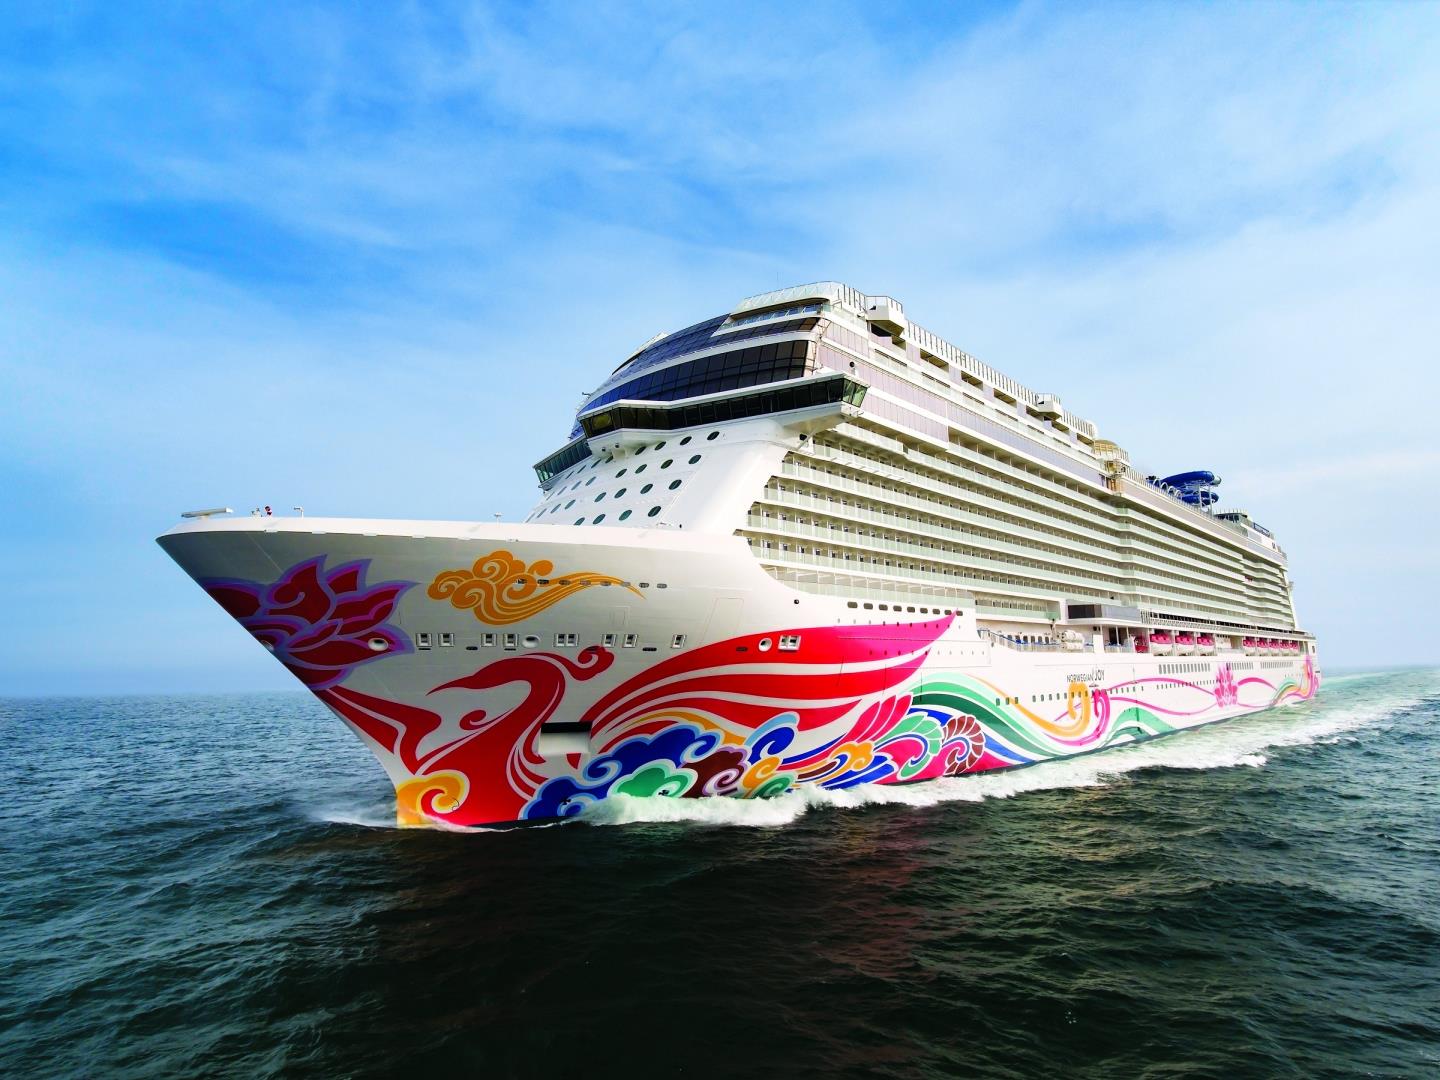 10-day Cruise to Transatlantic from Miami, Florida on Norwegian Joy